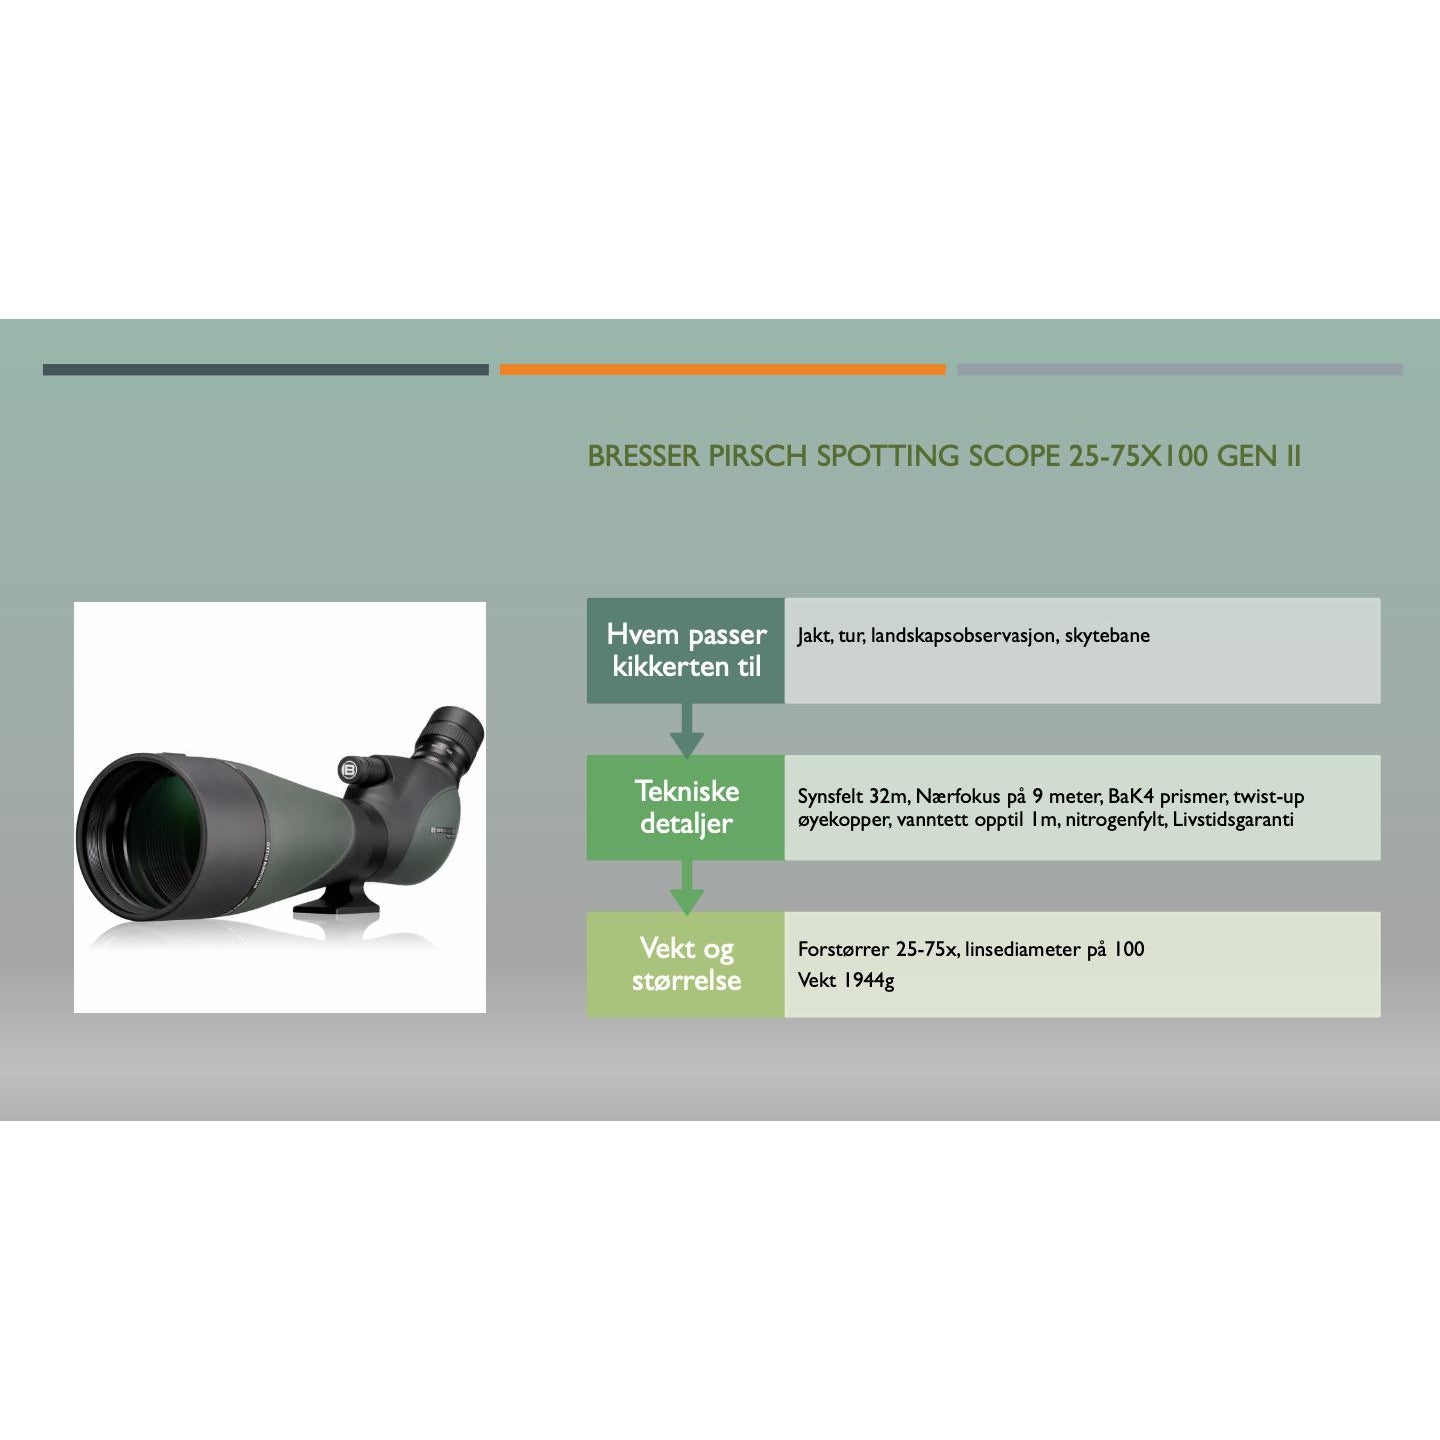 Bresser Pirsch 25-75x100 Spotting scope Gen II-Kikkerter-Bresser-Hyttefeber